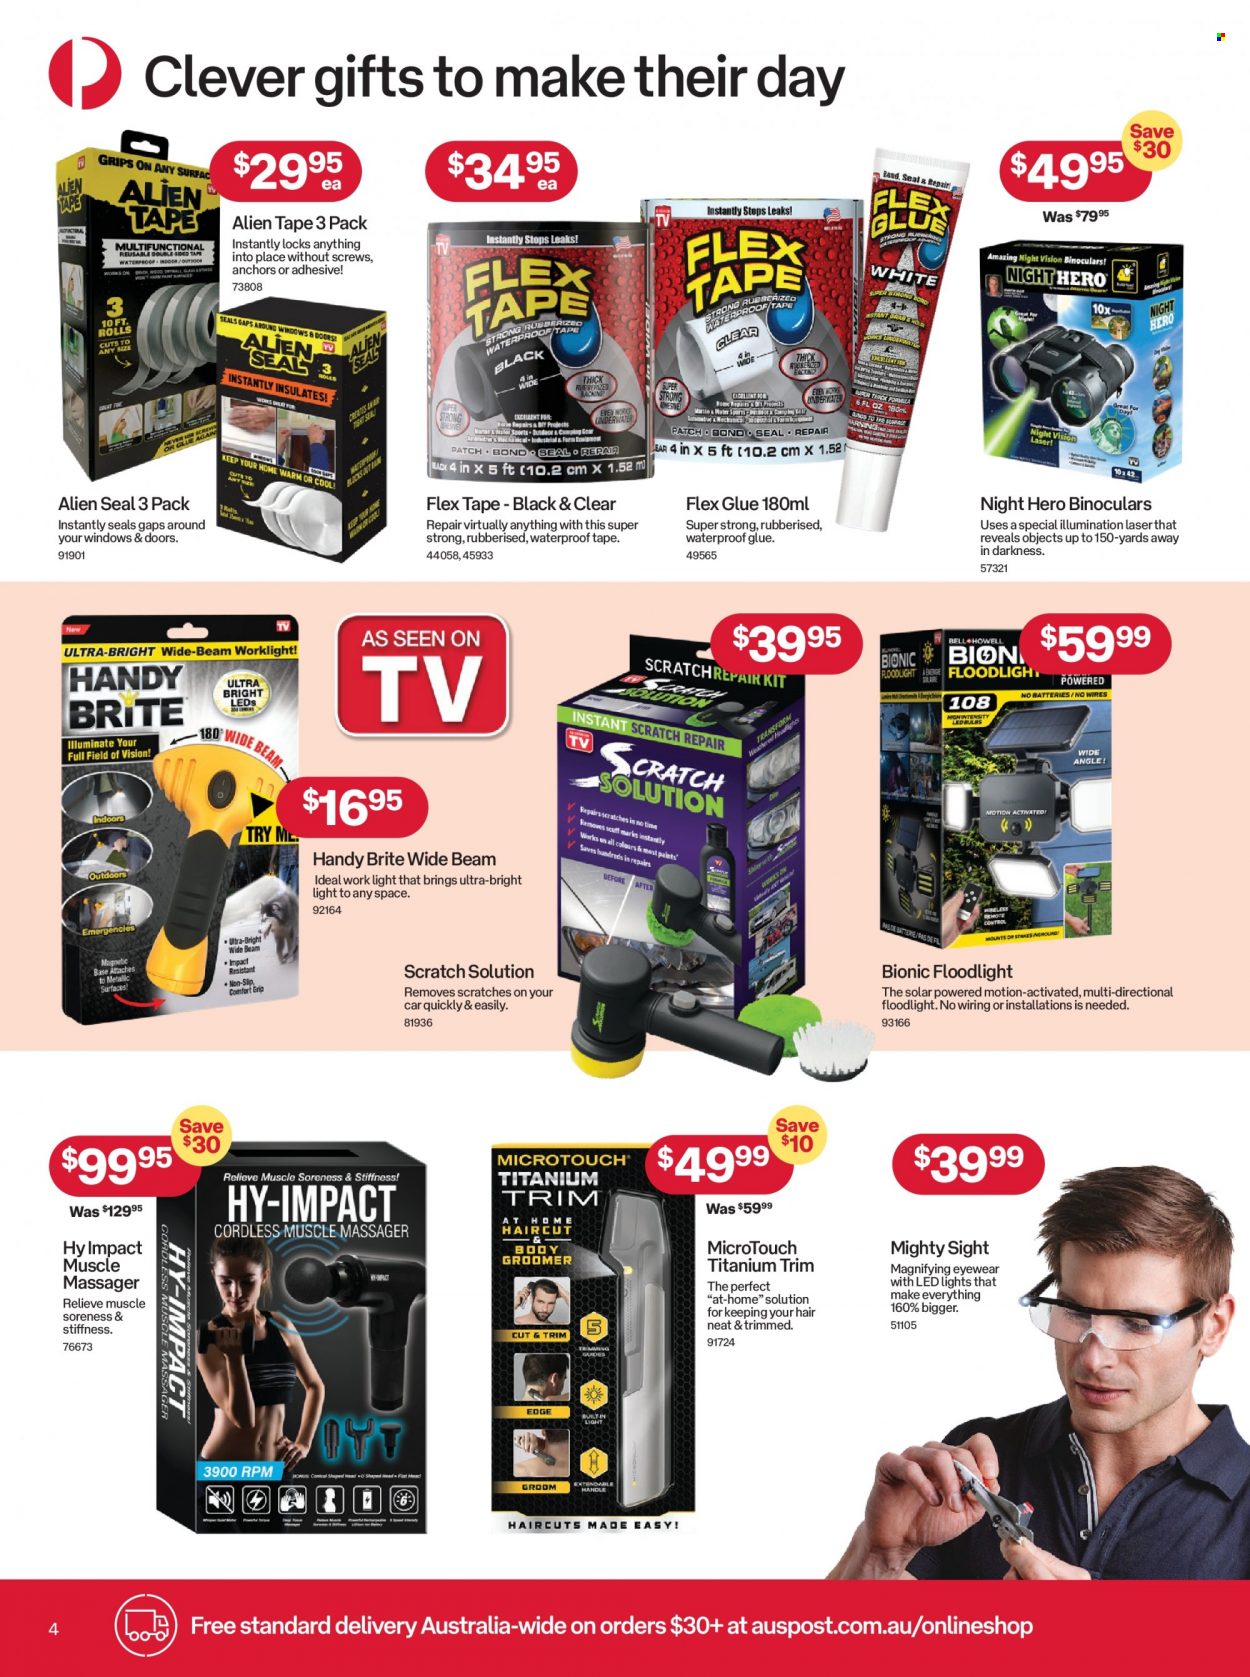 thumbnail - Australia Post Catalogue - 8 Nov 2021 - 28 Nov 2021 - Sales products - Brite, flex glue, glue, TV, remote control, massager, LED light, work light, floodlight. Page 4.